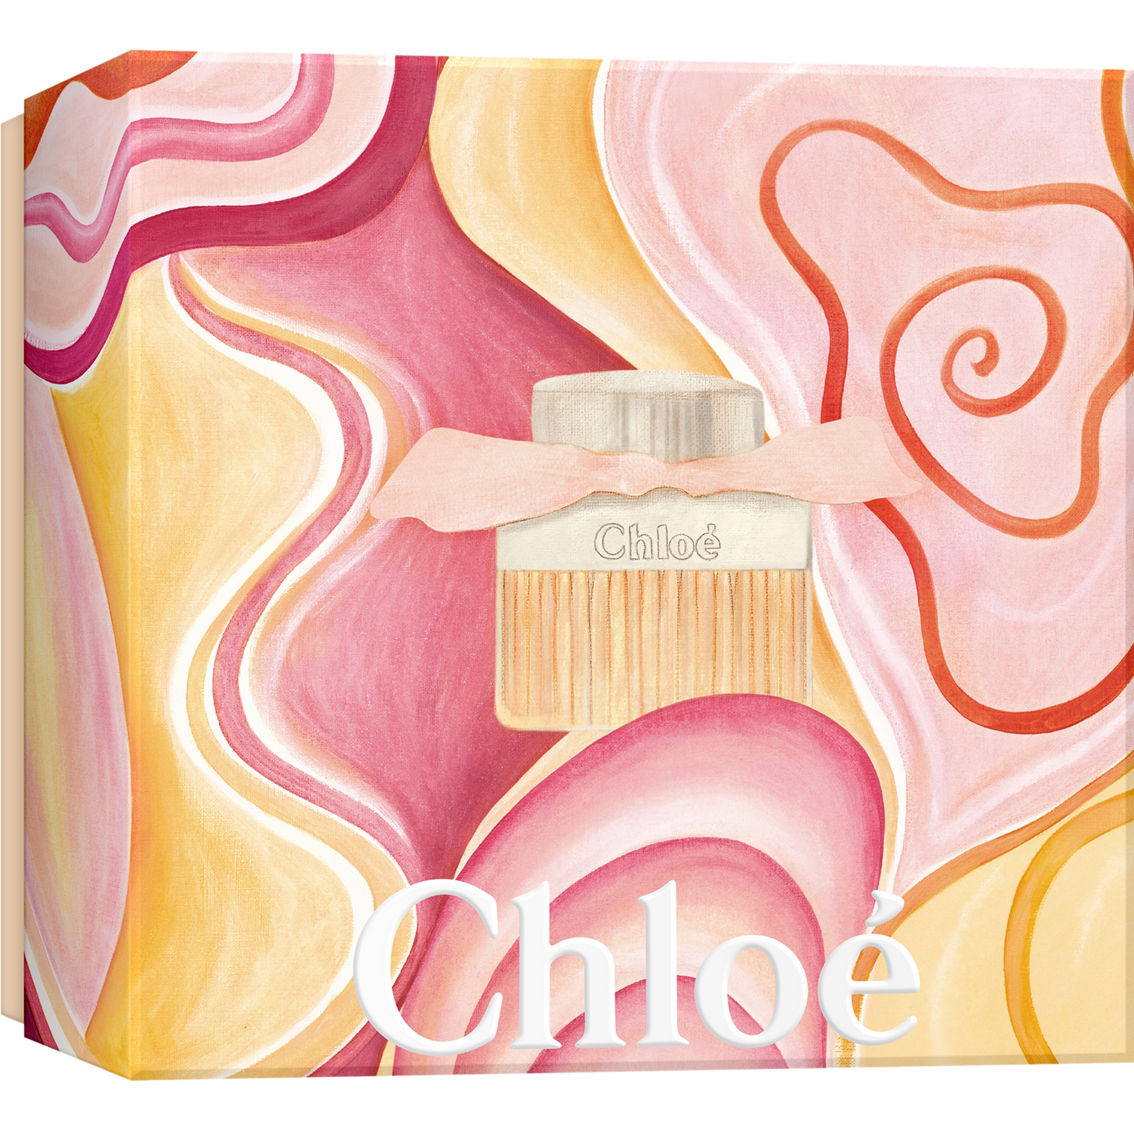 Chloe Eau de Parfum Gift Set - Image 3 of 3